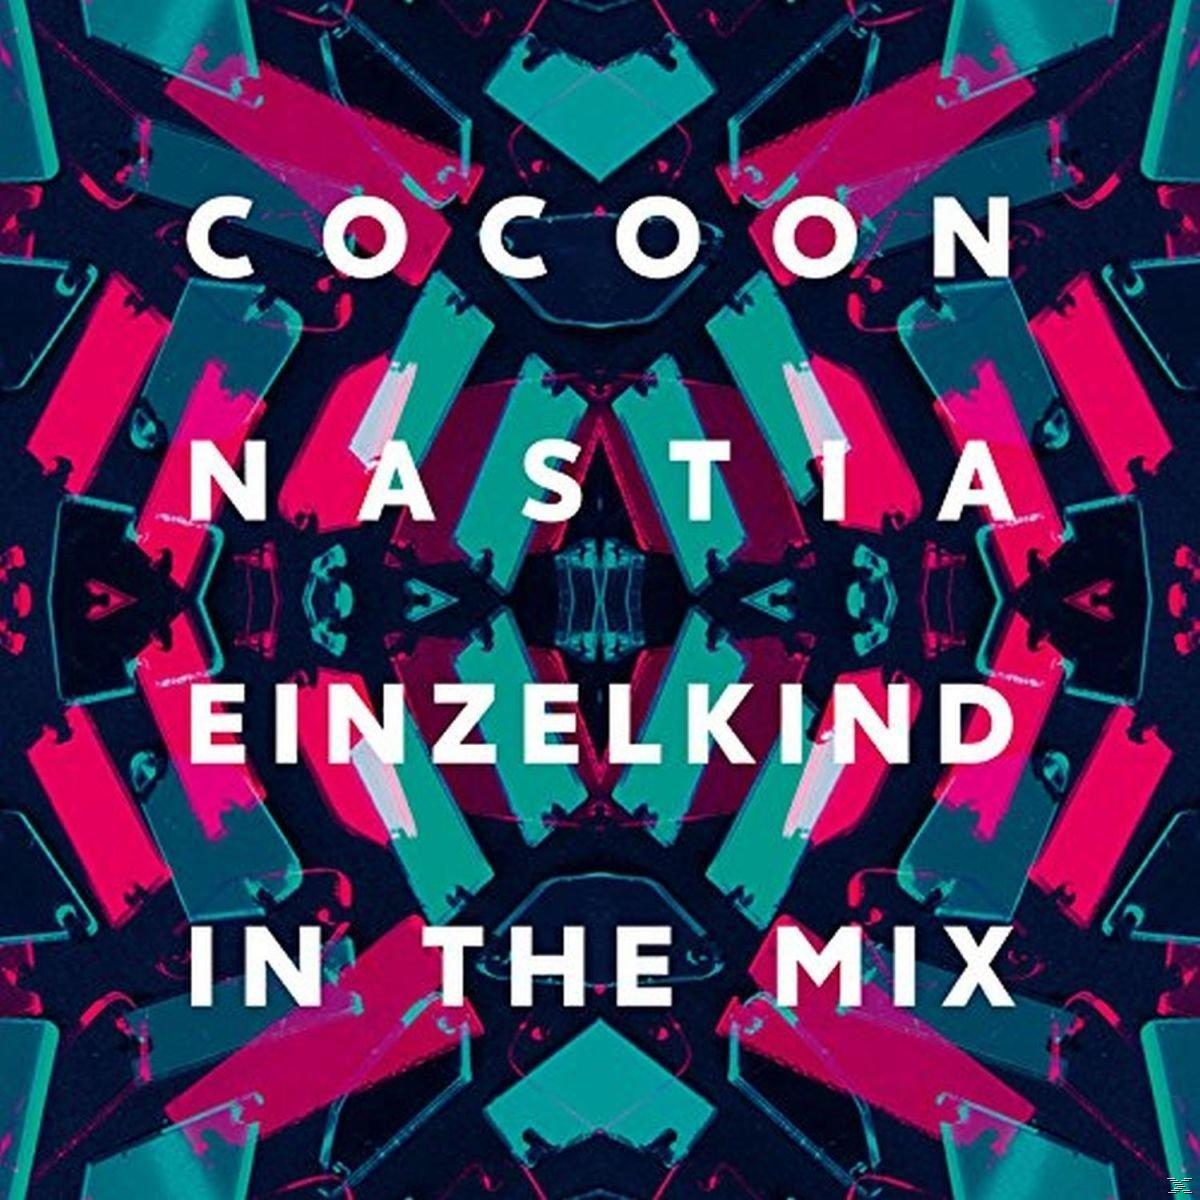 Cocoon Ibiza mixed (CD) - VARIOUS by - & Nastia